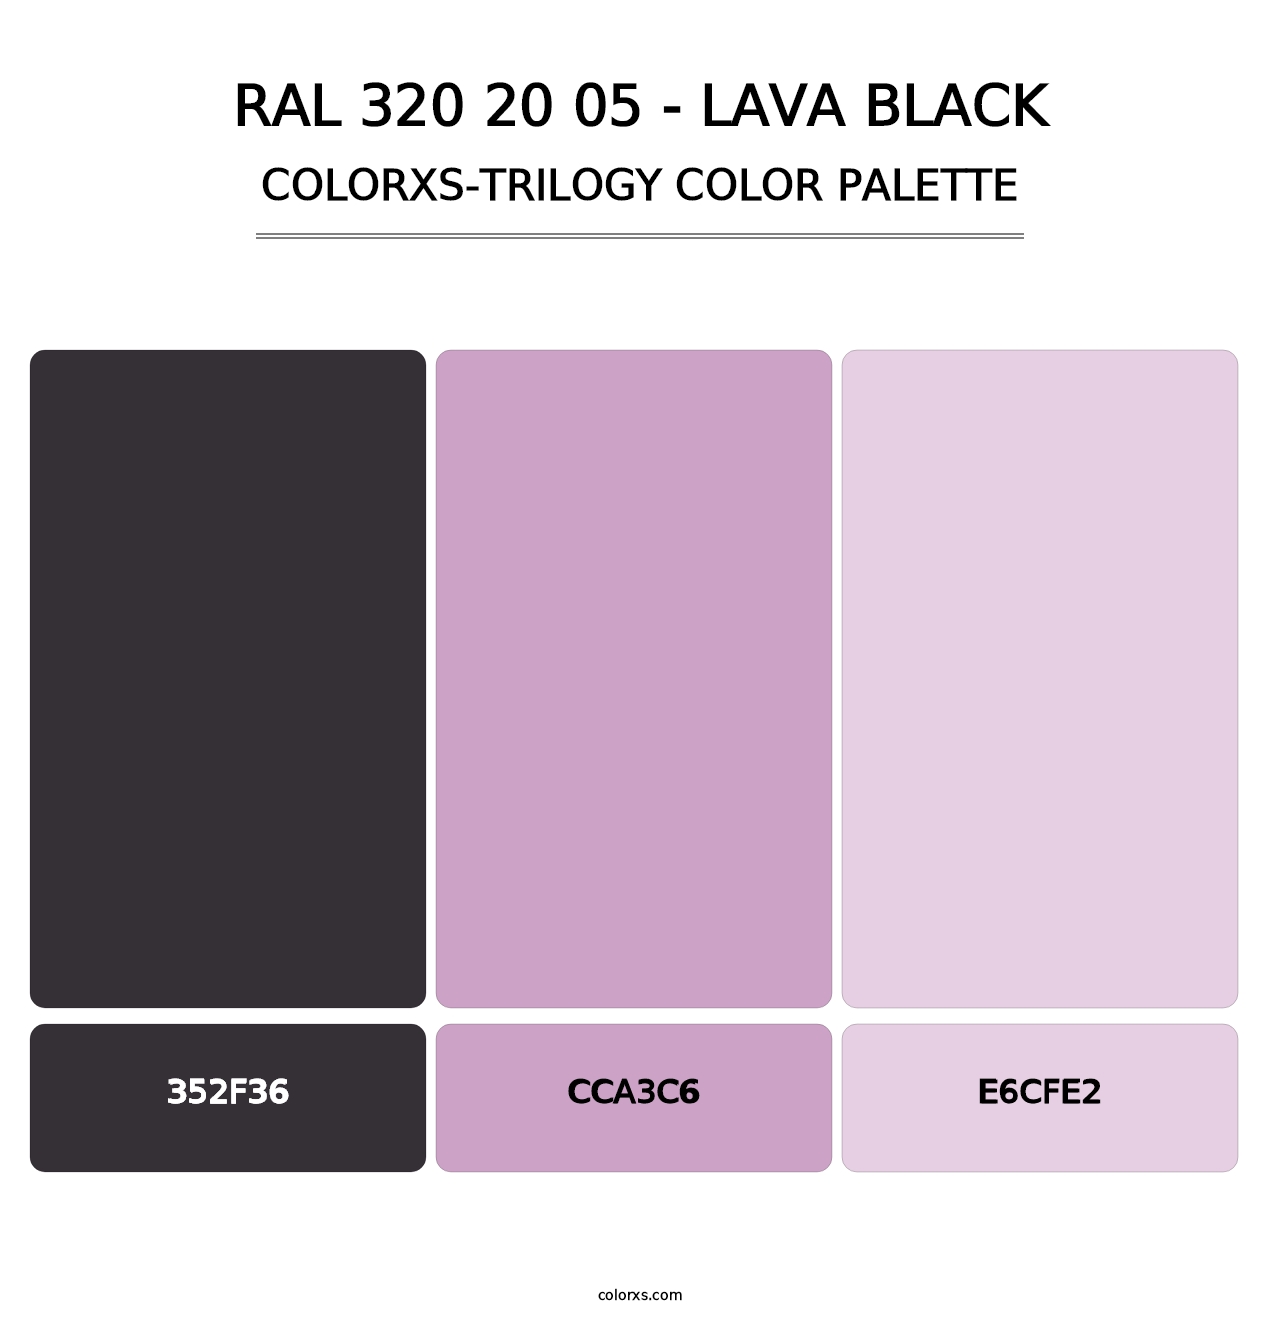 RAL 320 20 05 - Lava Black - Colorxs Trilogy Palette